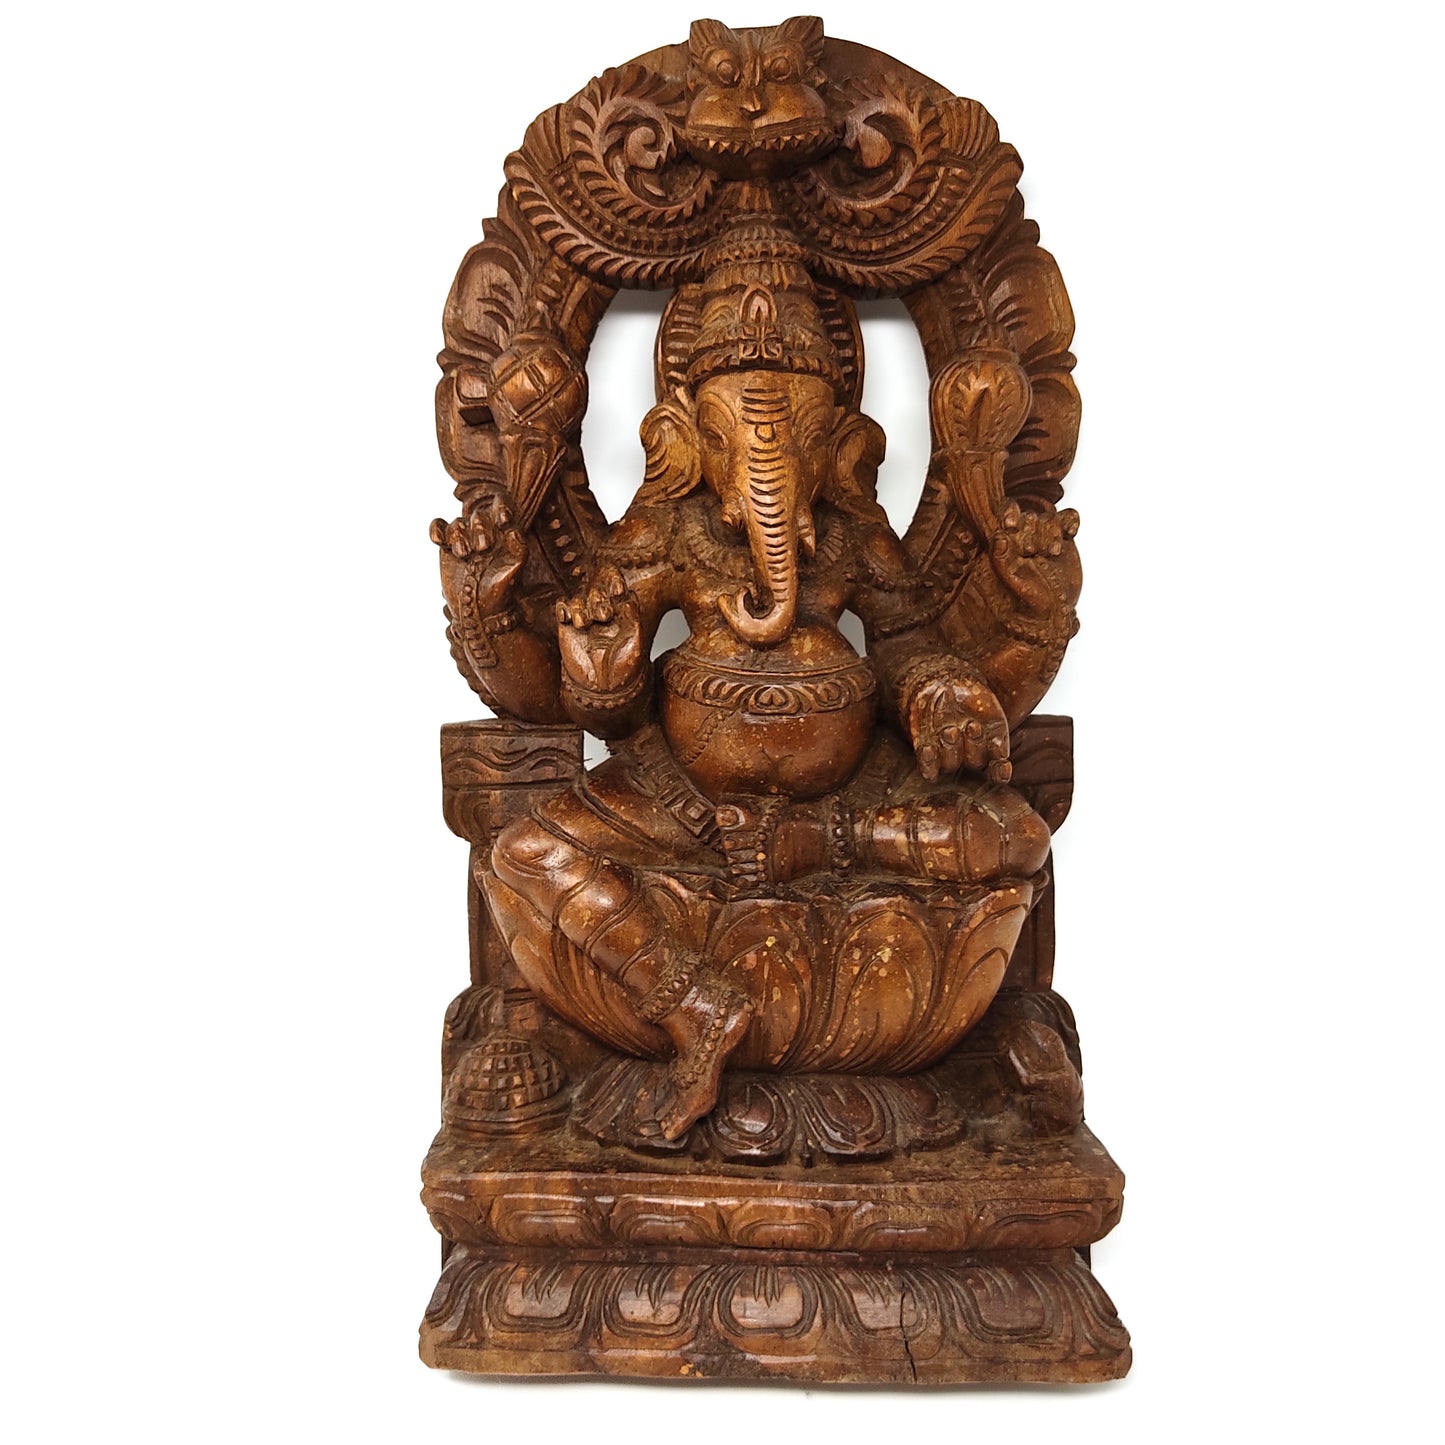 Vintage Ganesh Wood Carving Wall Hanging -  Hindu Elephant God Wall Decor  18"